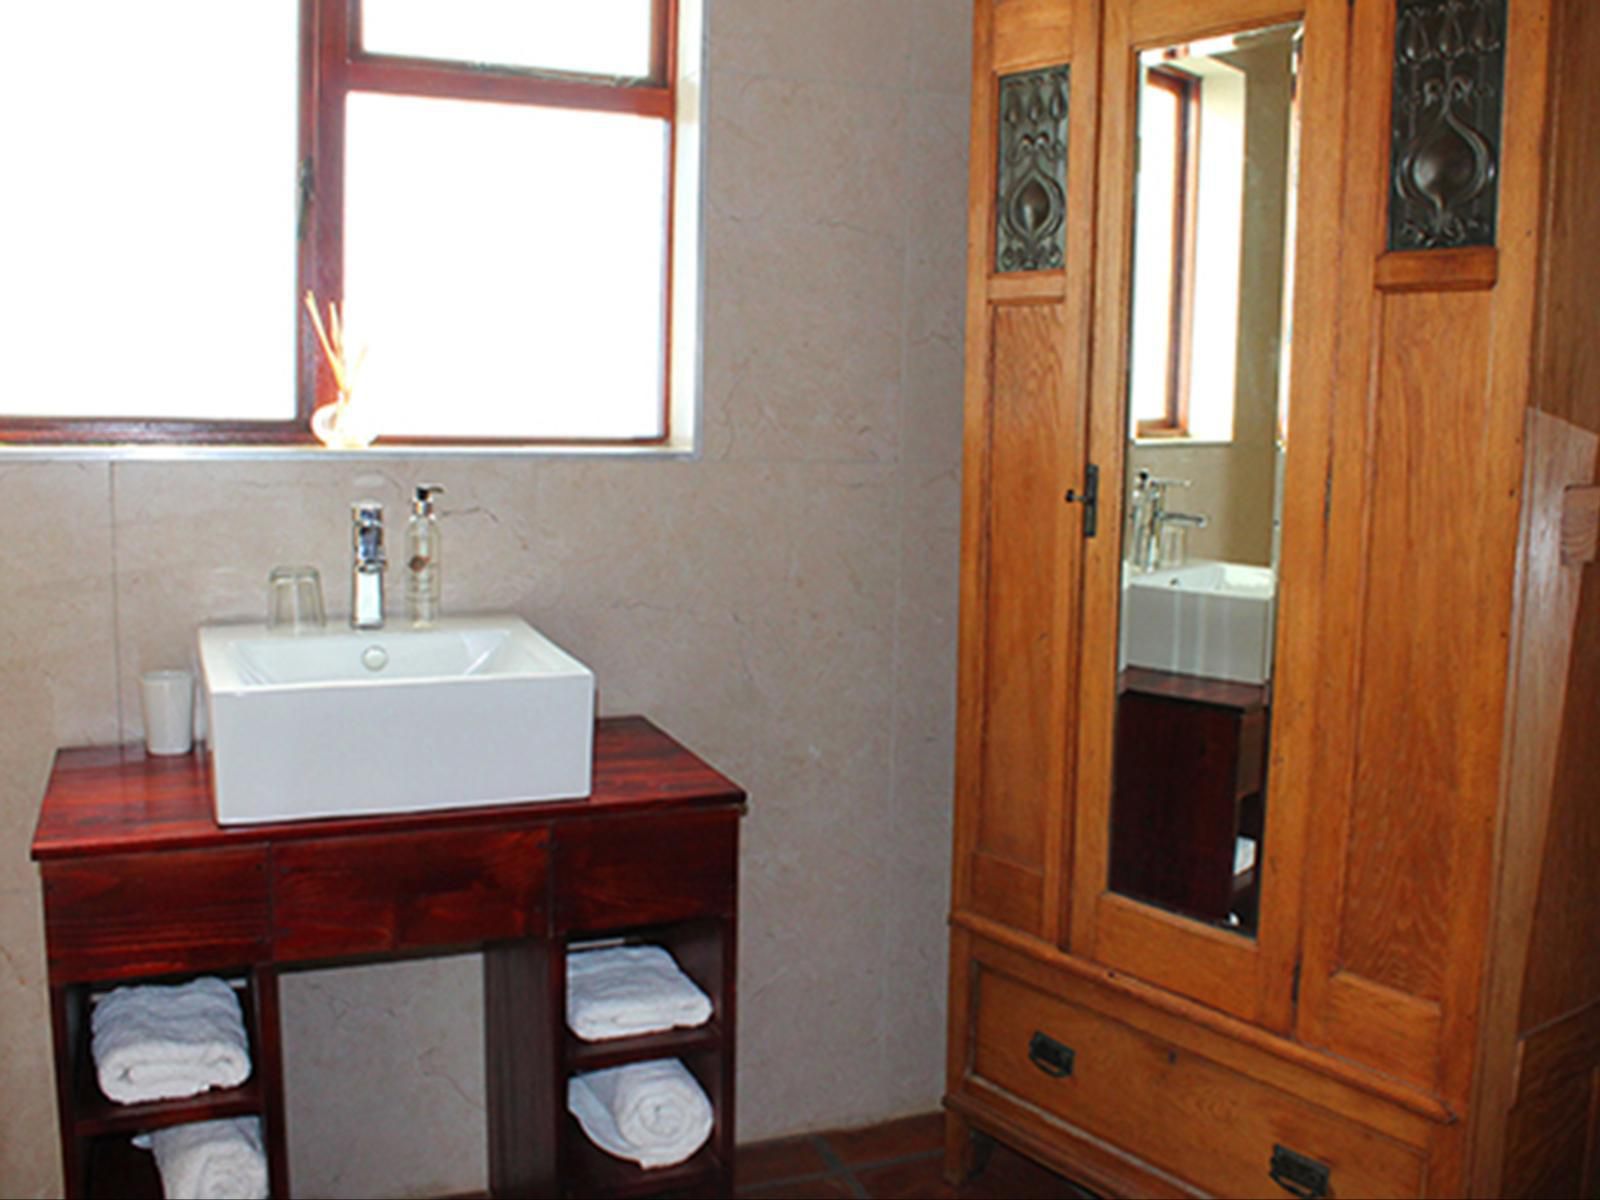 Goblins Inn Stompneusbaai St Helena Bay Western Cape South Africa Bathroom